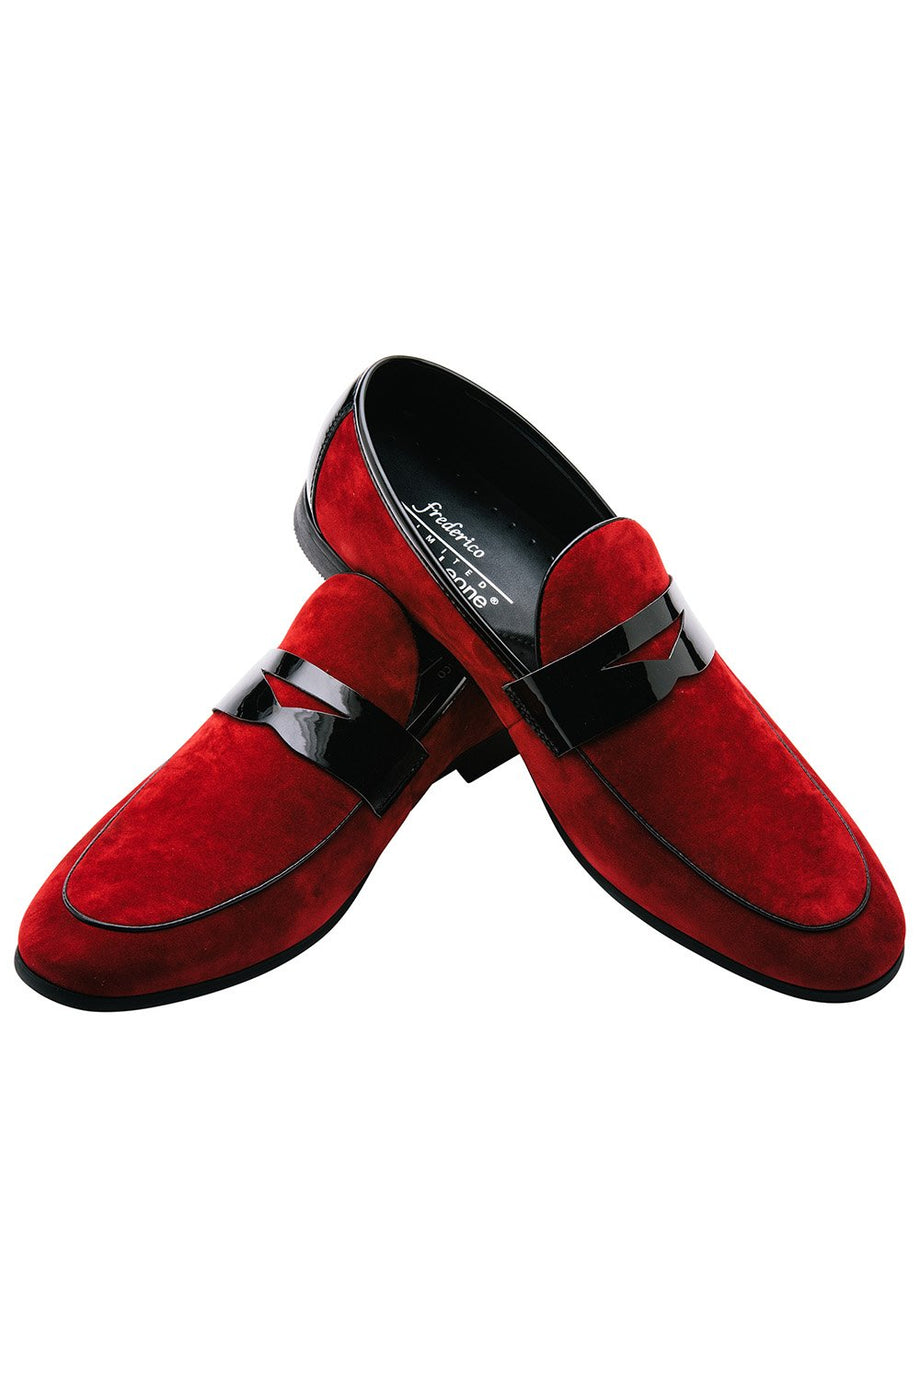 Frederico Leone "New Yorker" Red Suede Frederico Leone Tuxedo Shoes